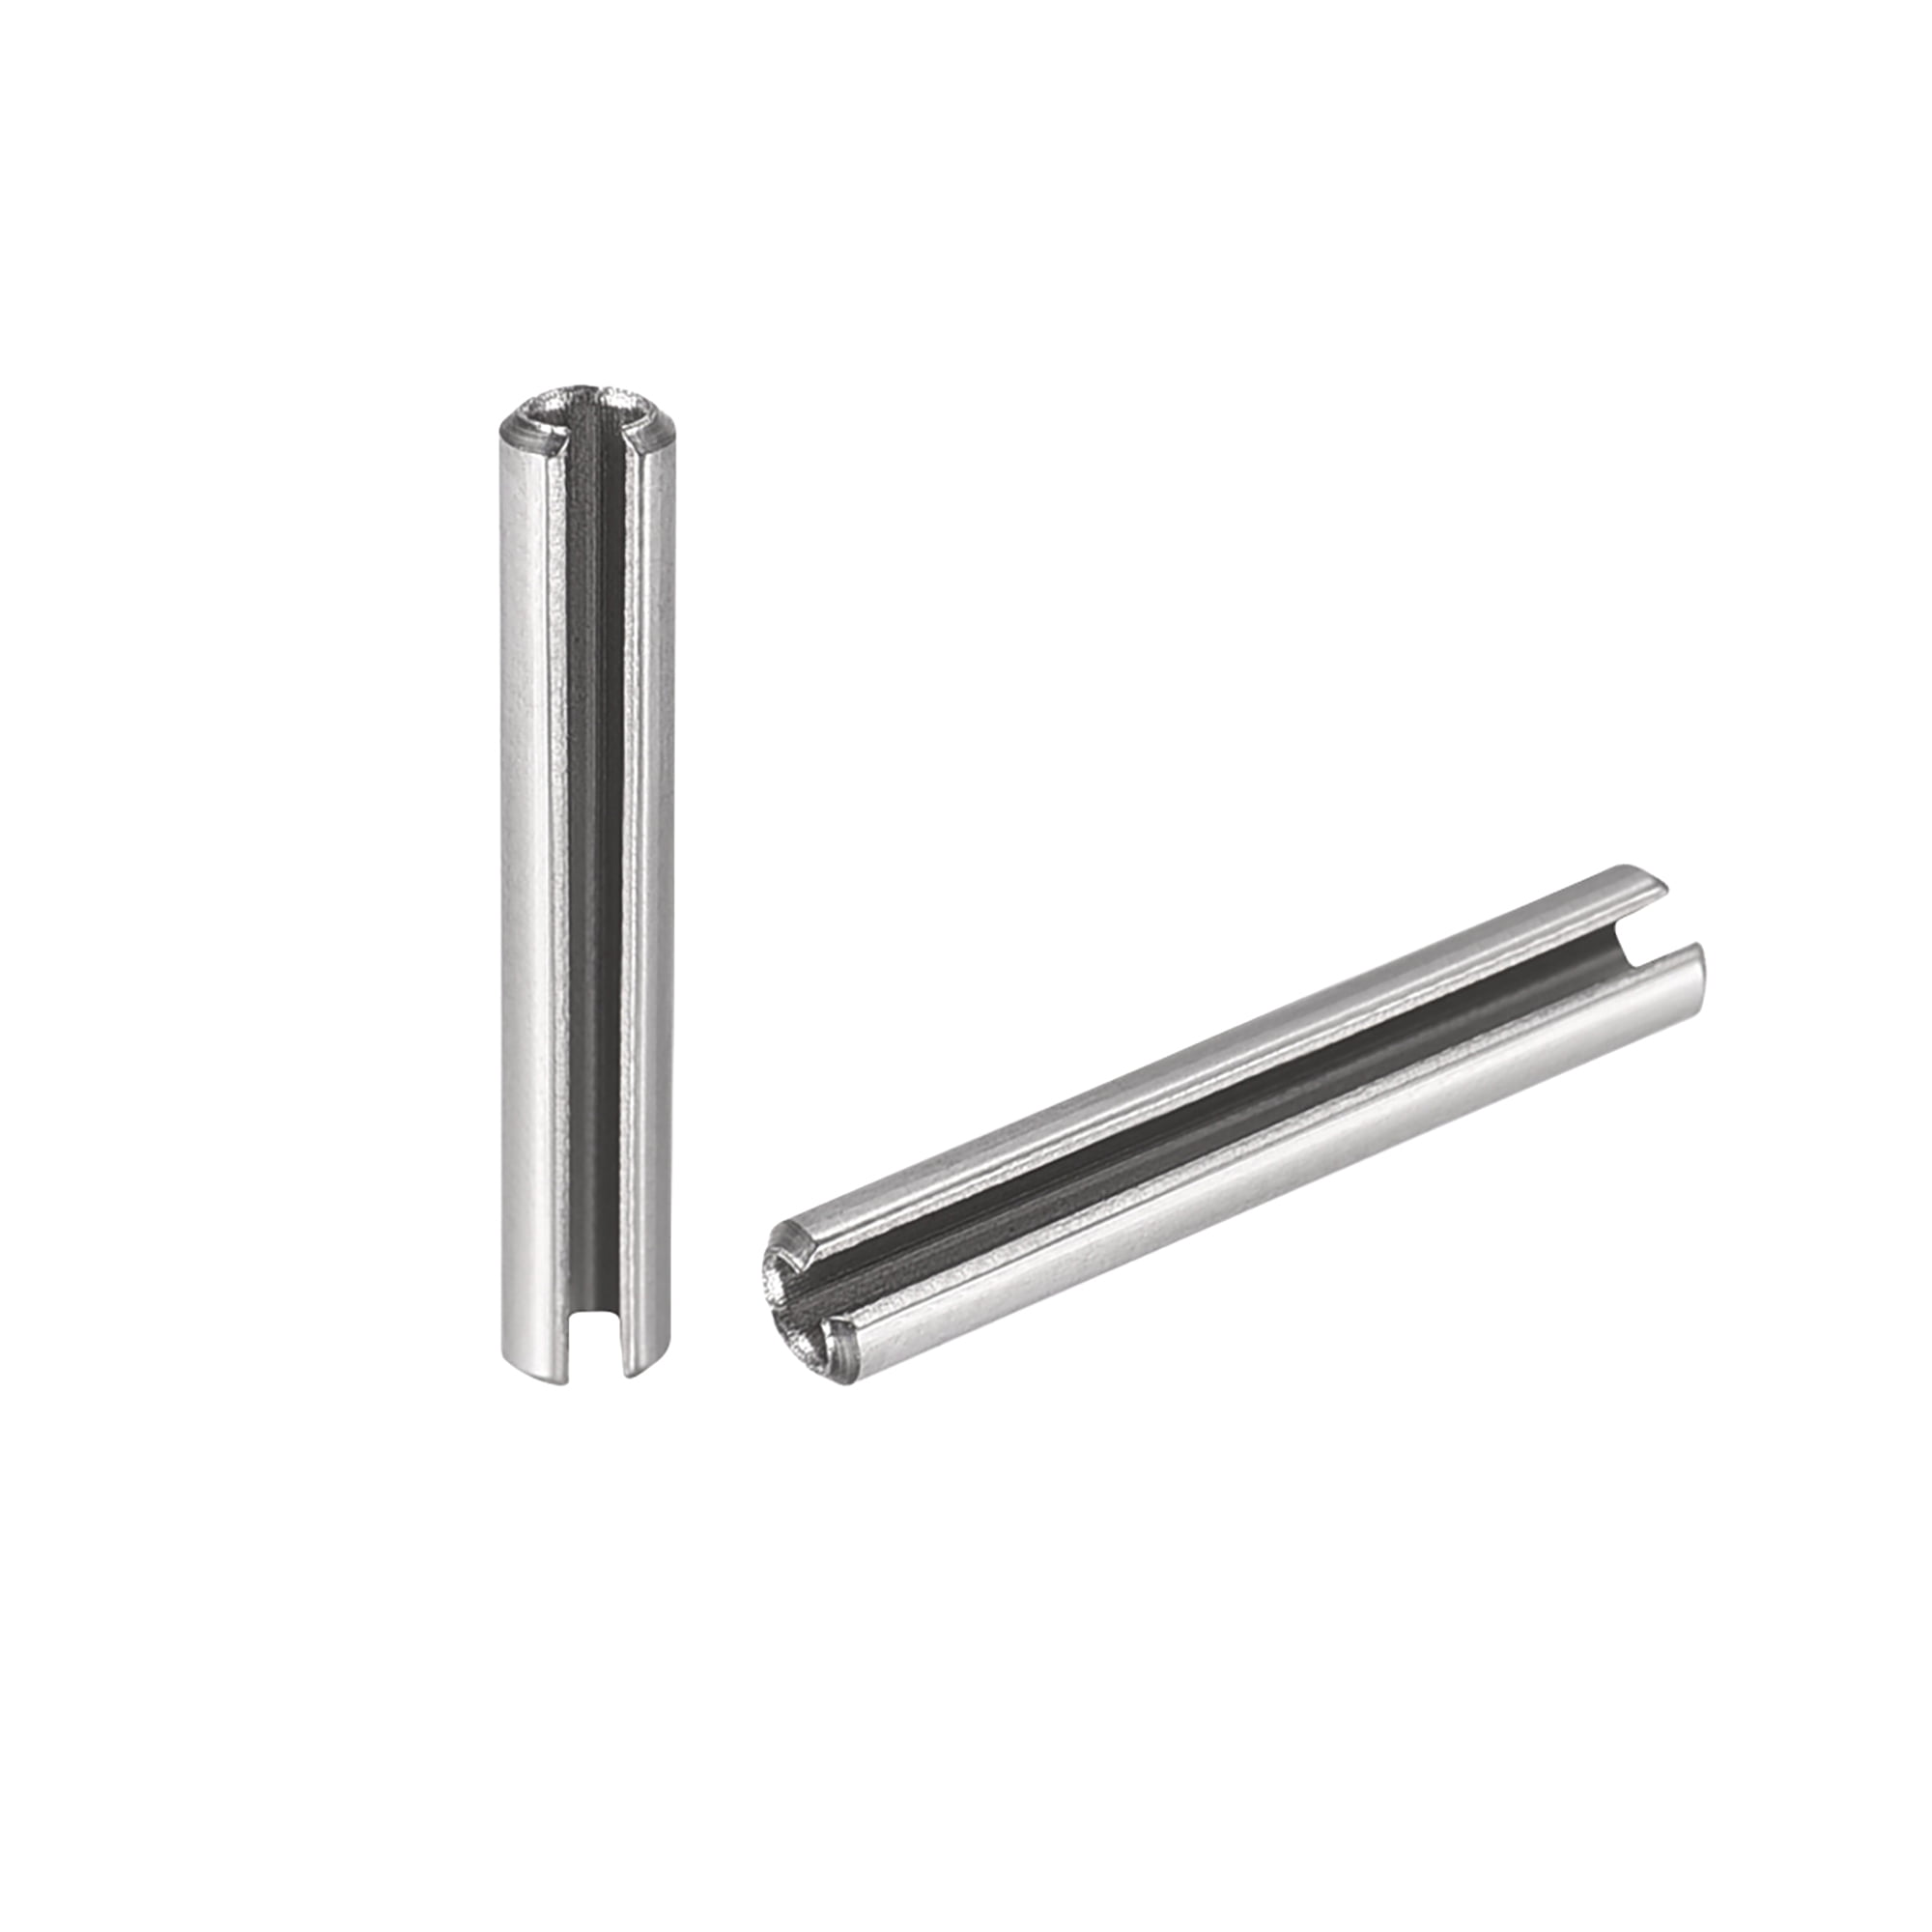 M5 Dia x 30 mm Length Metric Steel Slotted Spring Pin 100 pcs 